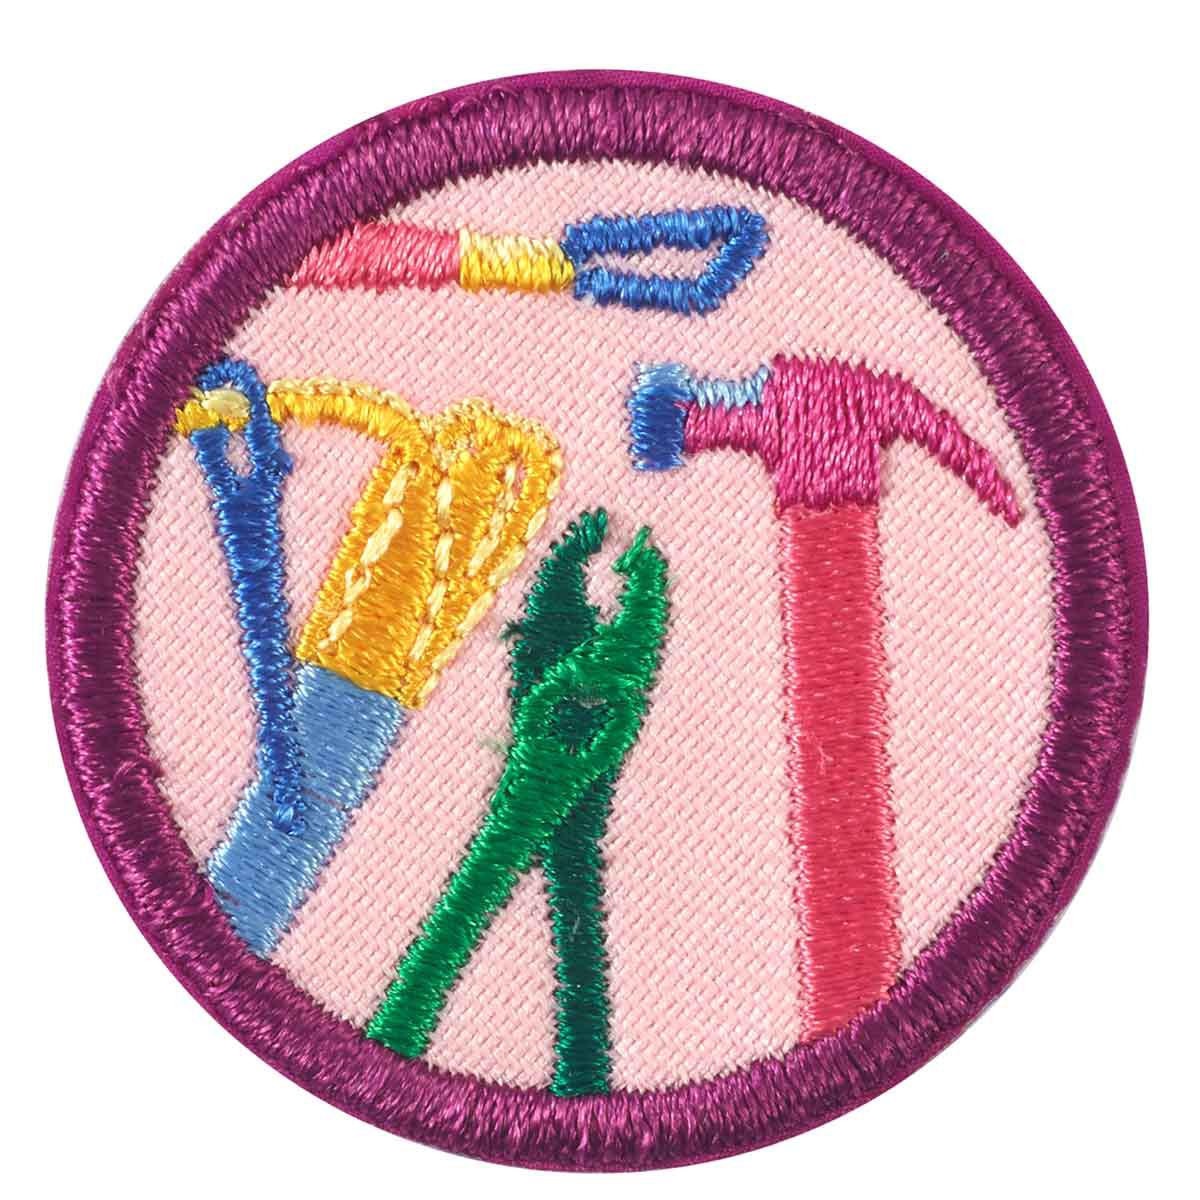 Badge Magic Girl Scout Junior To Ambassador Uniform Kit